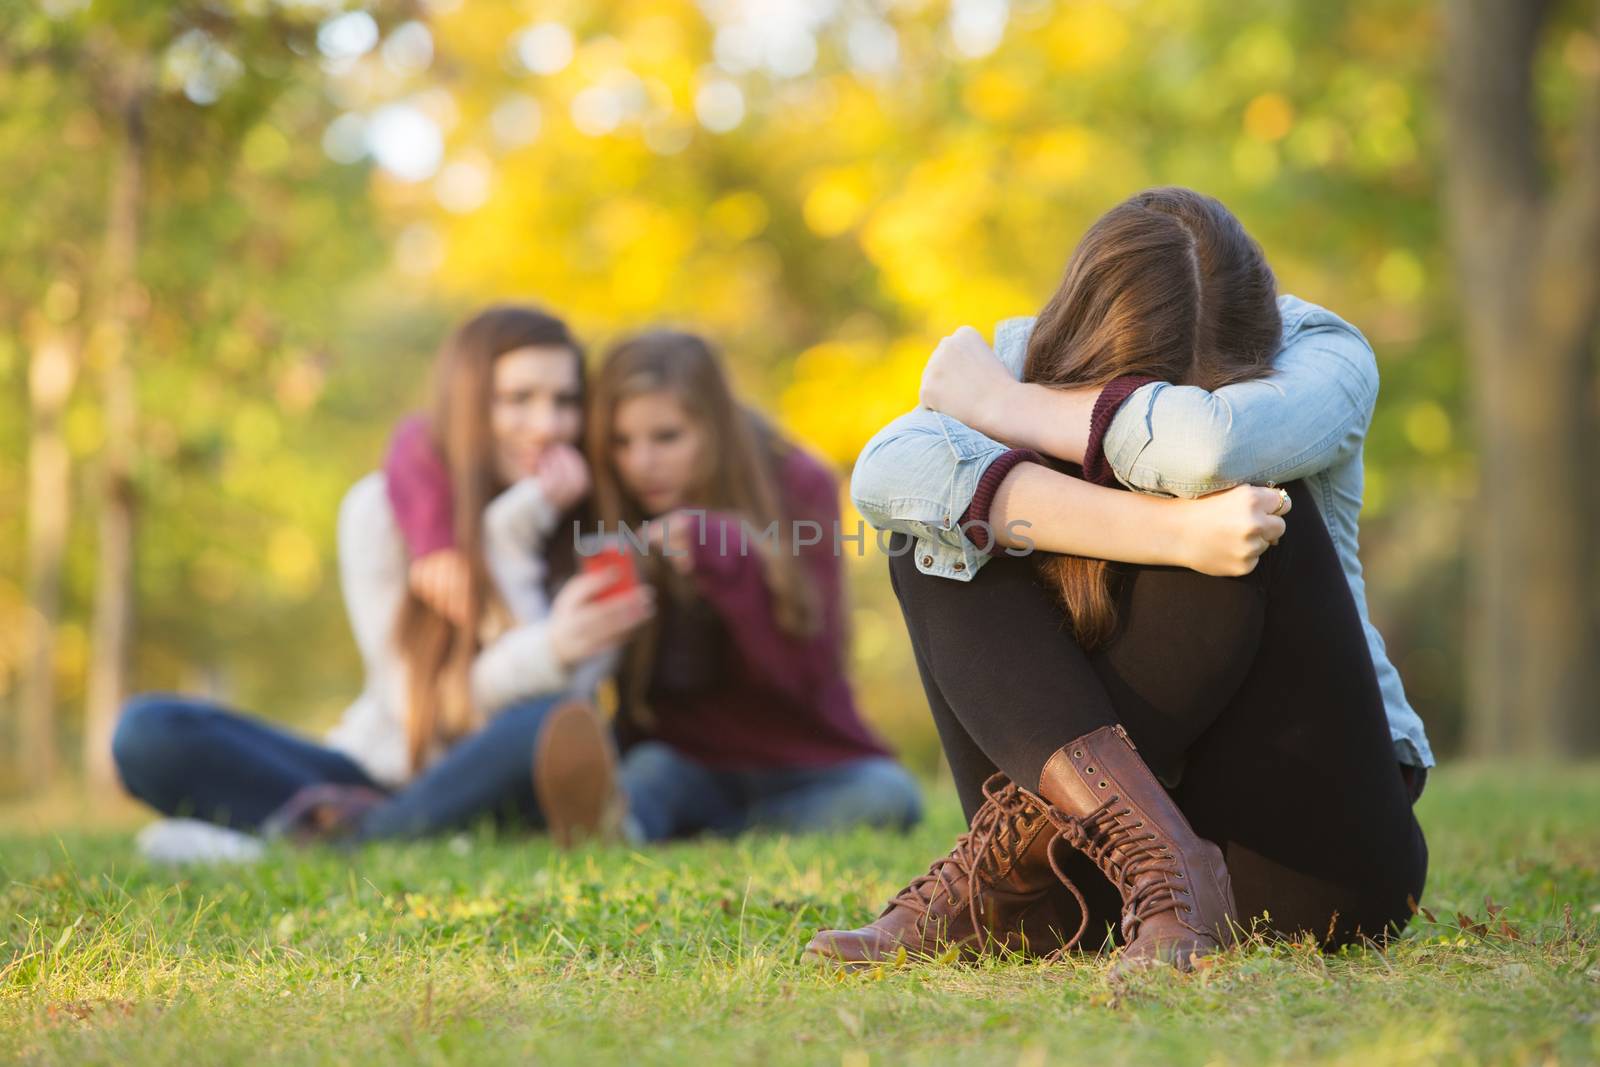 Sad teenage woman sitting with head down near laughing group